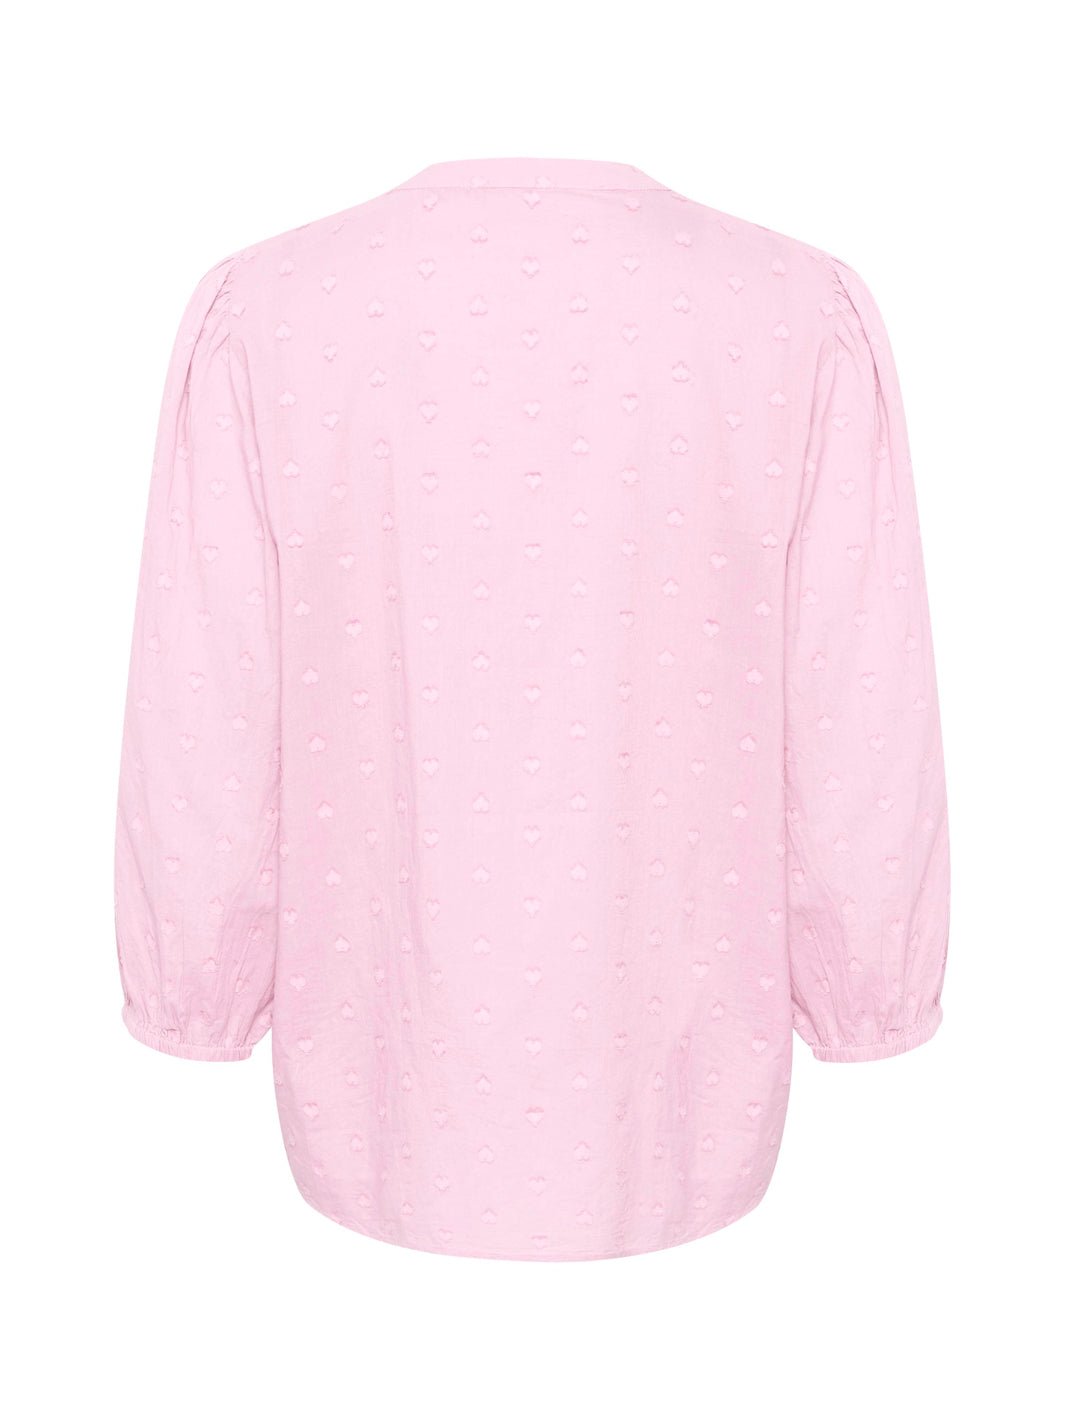 Kaffe KAjollia bluse pink mist - Online-Mode